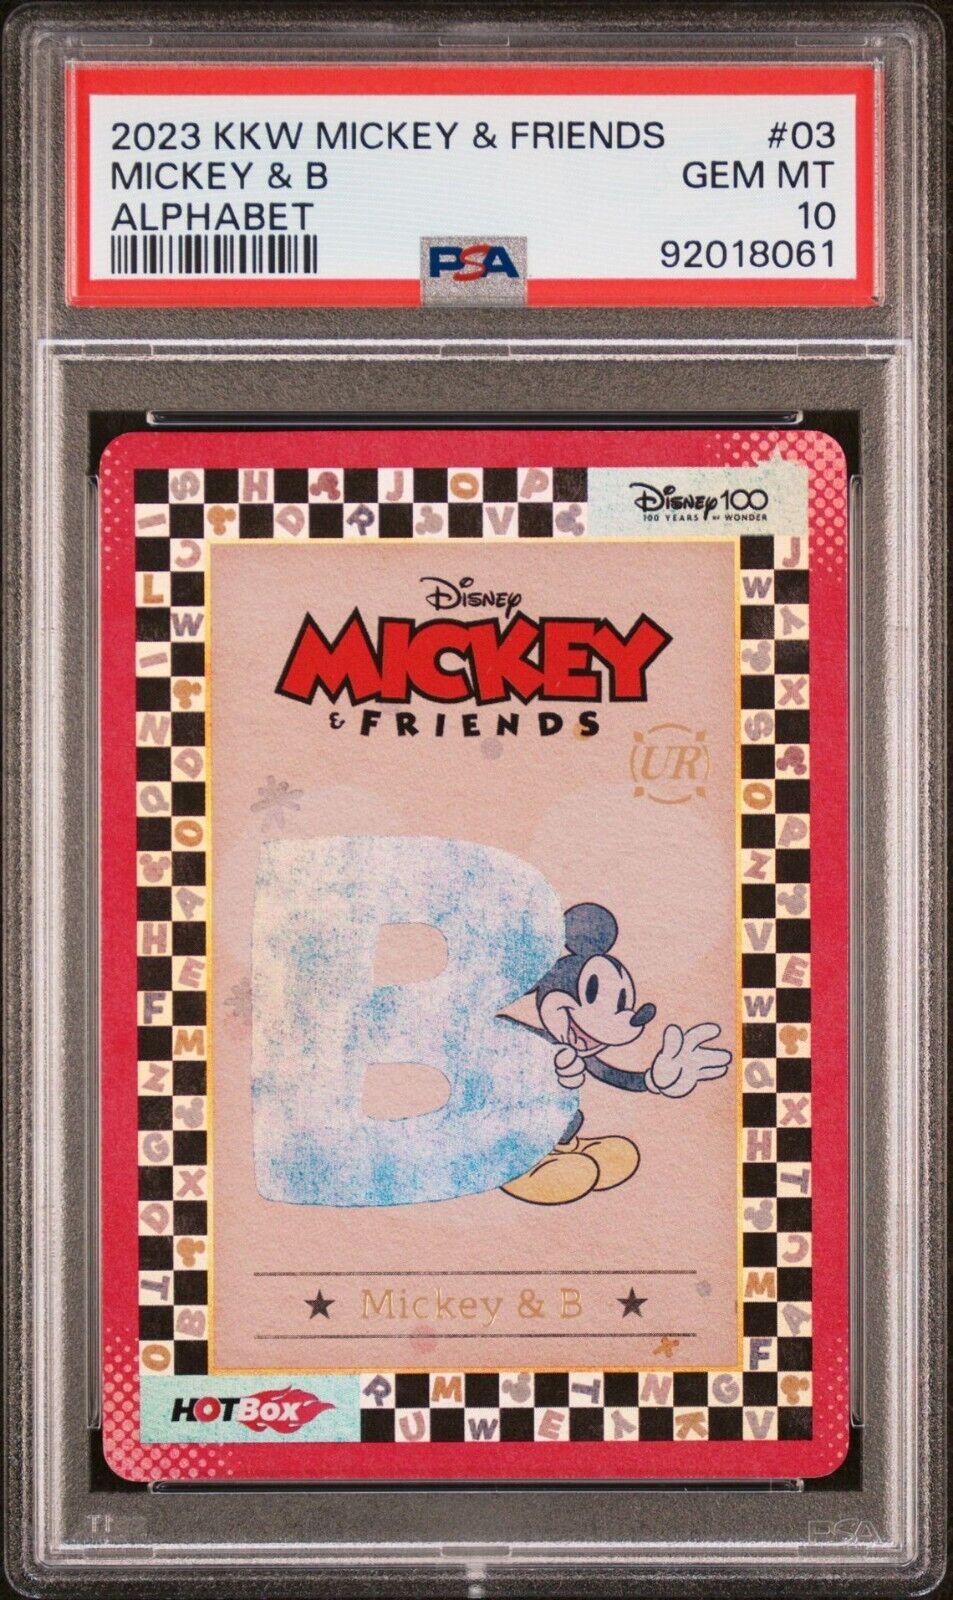 MICKEY & B 2023 Kakawow Mickey & Friends Mickey & B PSA 10 GEM MINT POP 2